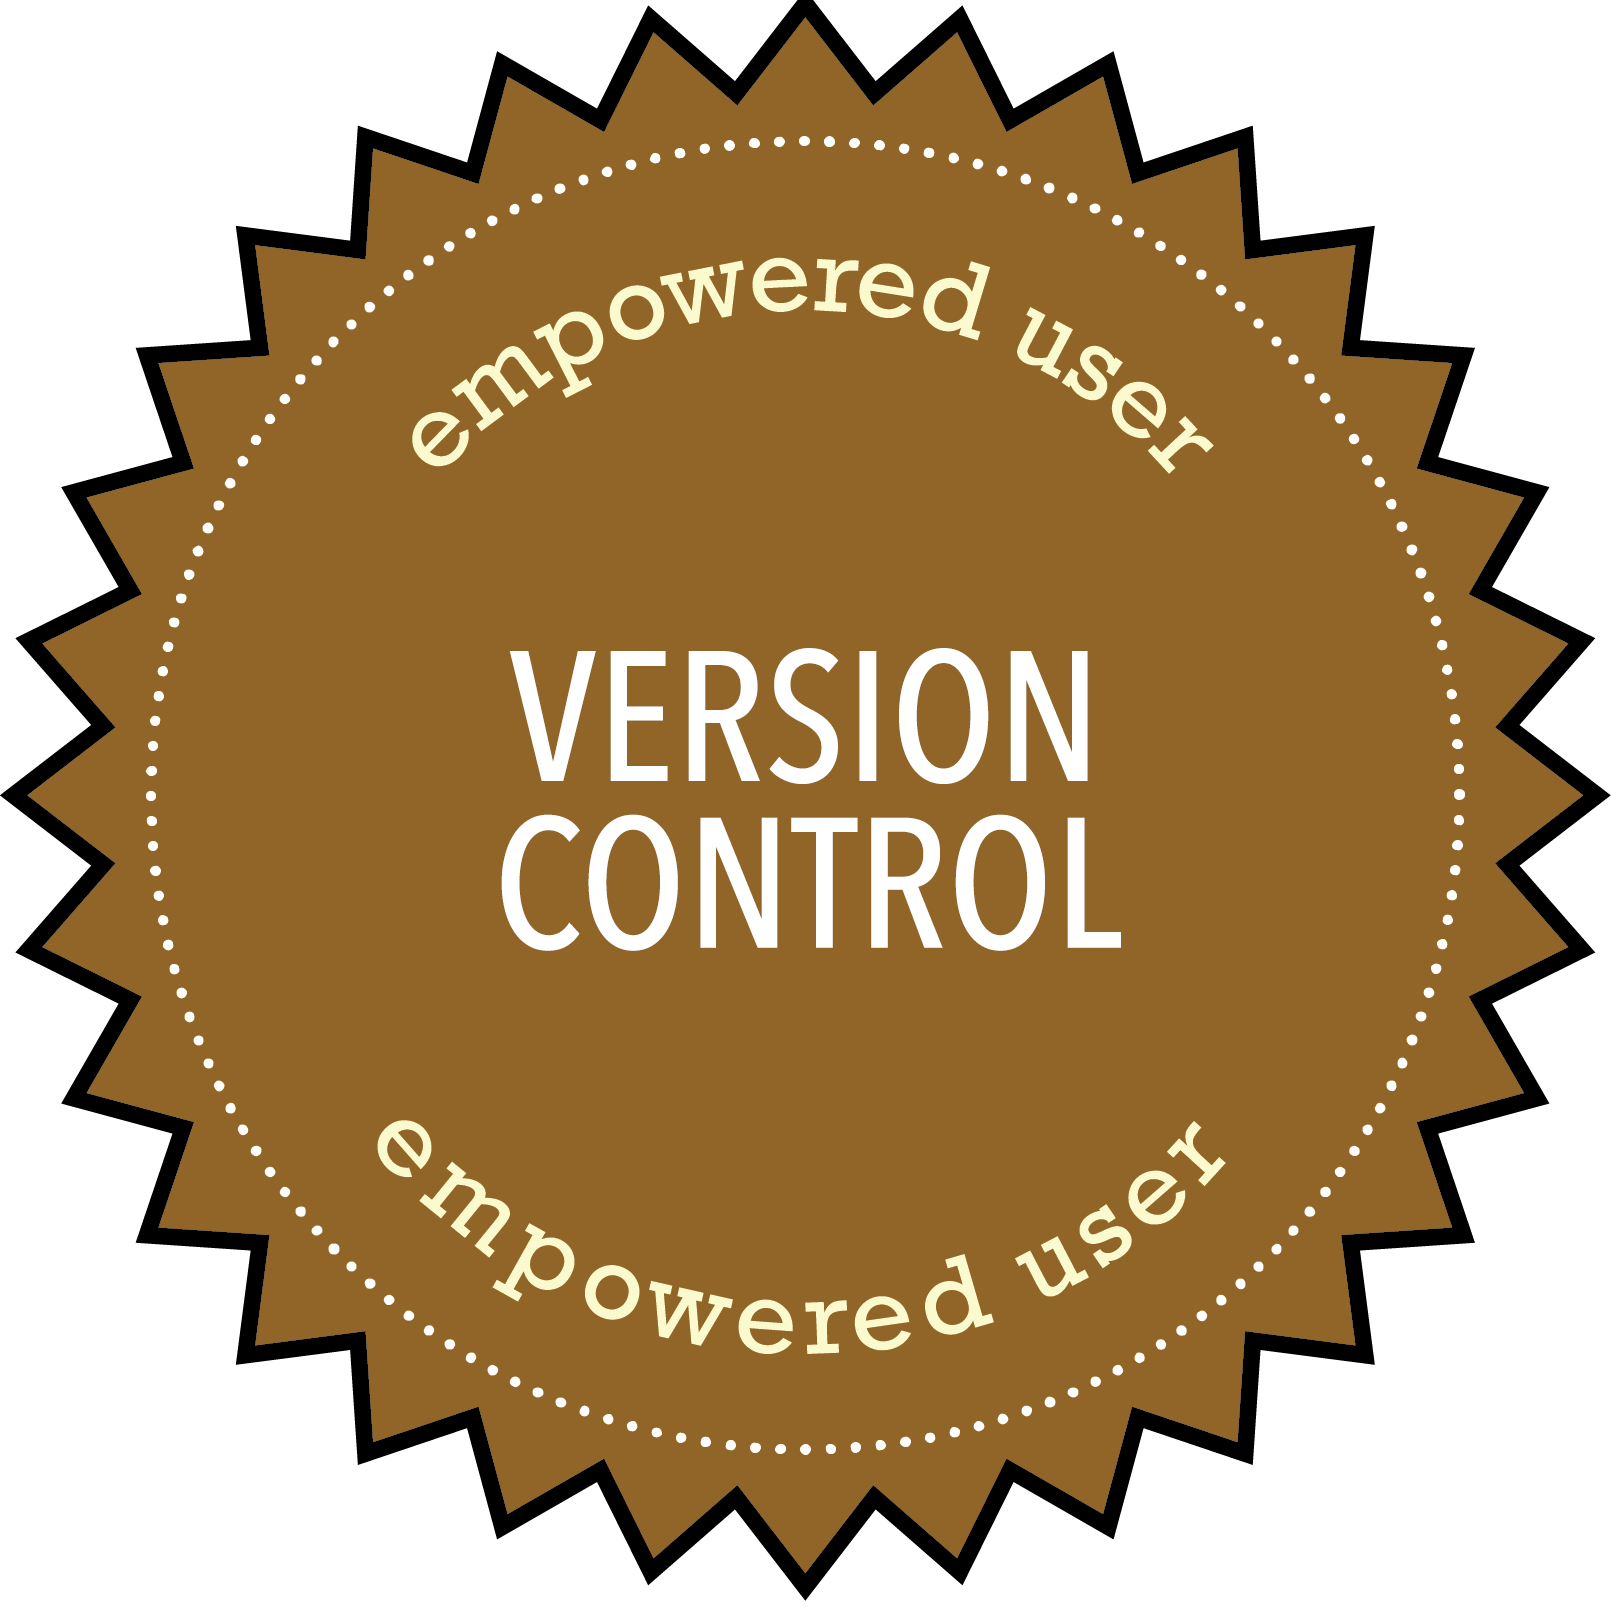 Empowered User Version Control